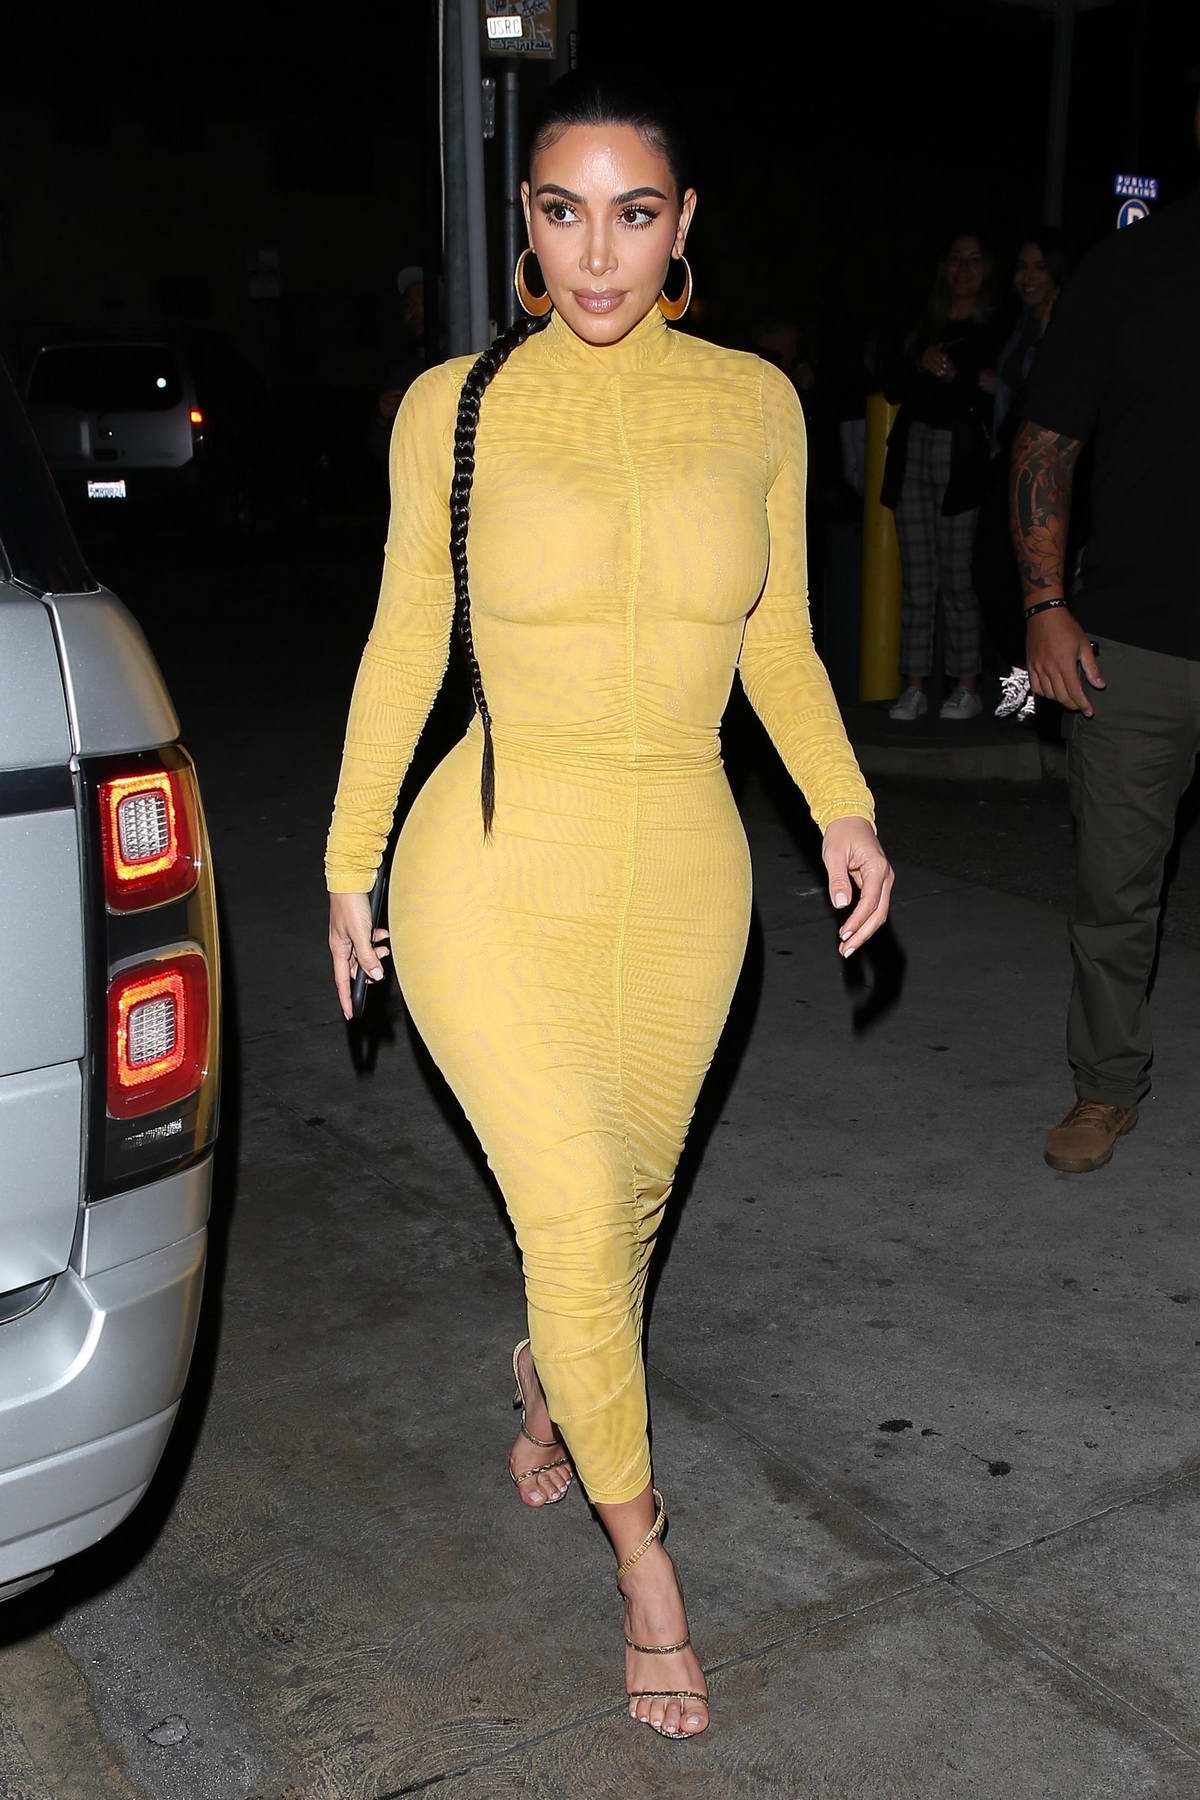 Kim Kardashian stuns in a form-fitting yellow dress as she arrives